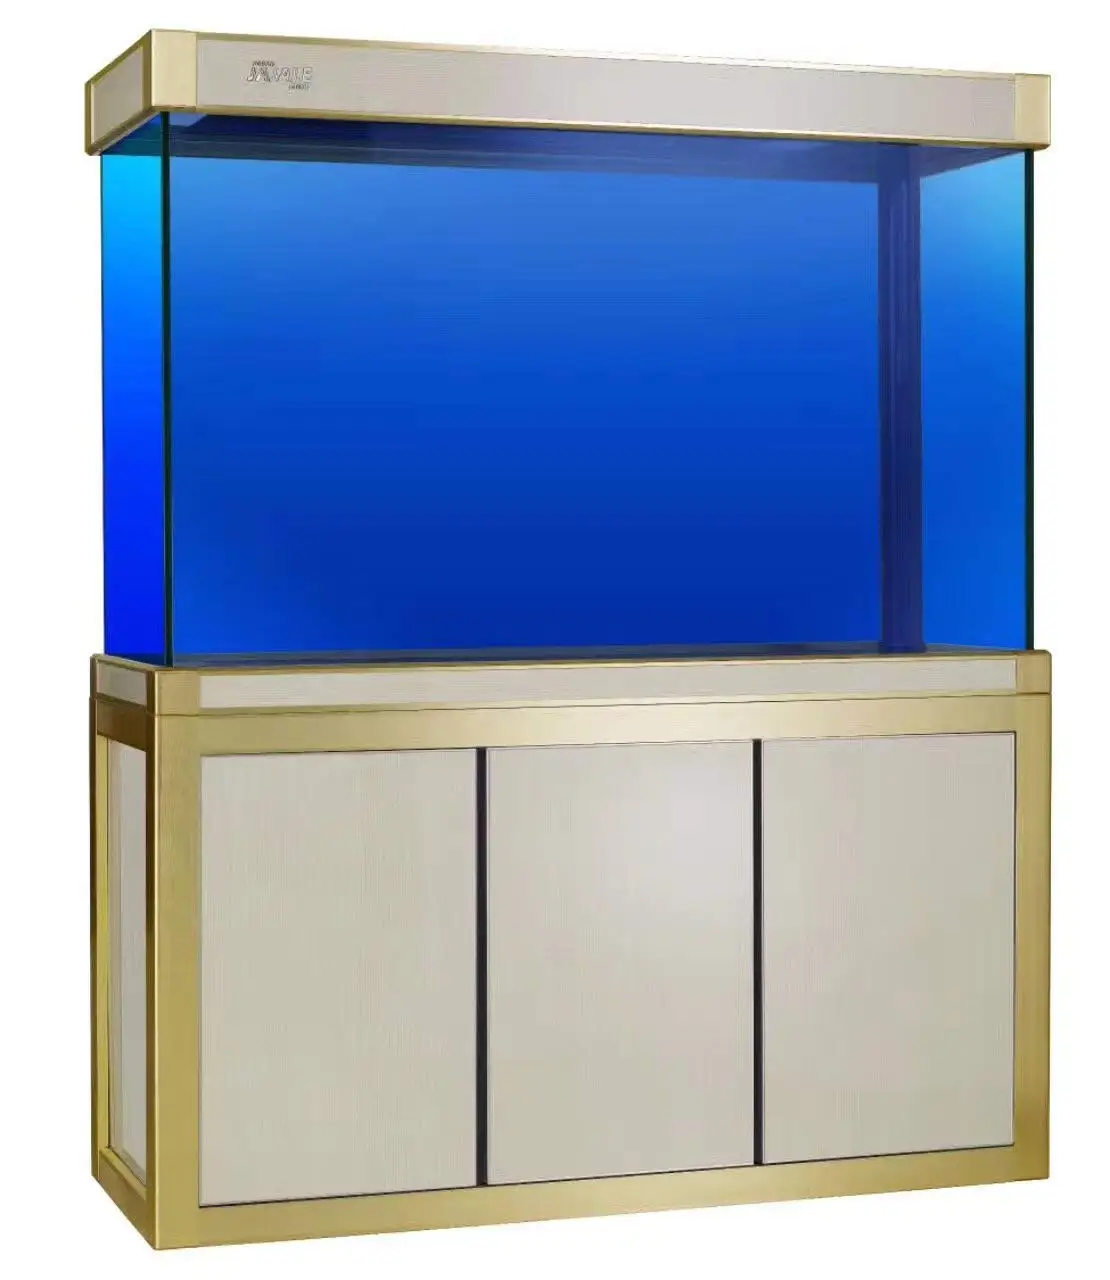 30 gallon fish tank stand modern